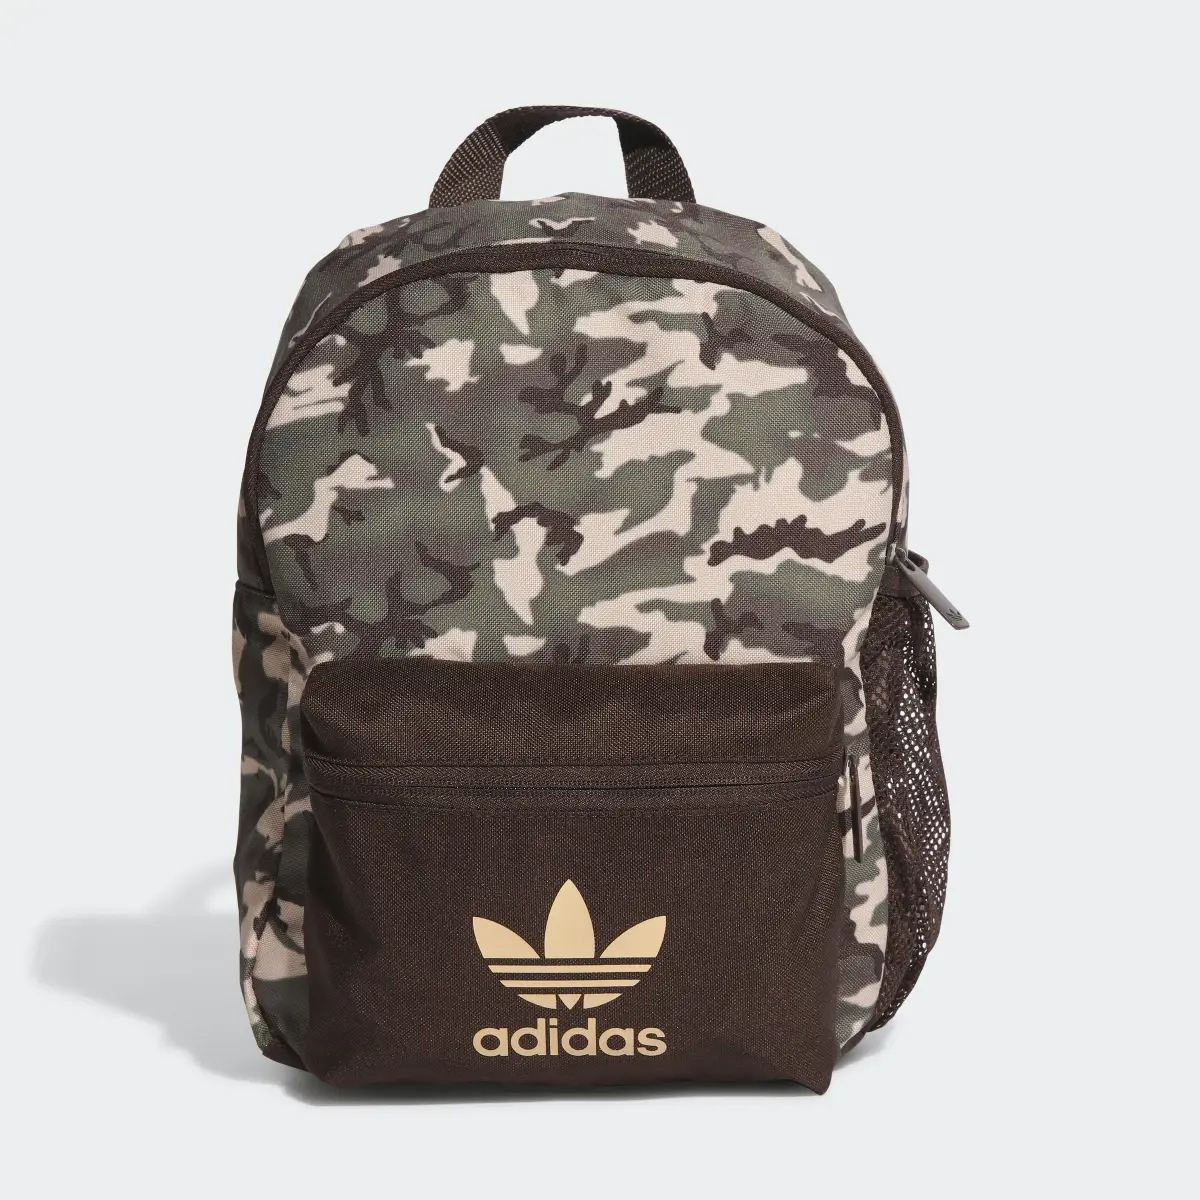 Adidas Camo Backpack. 2